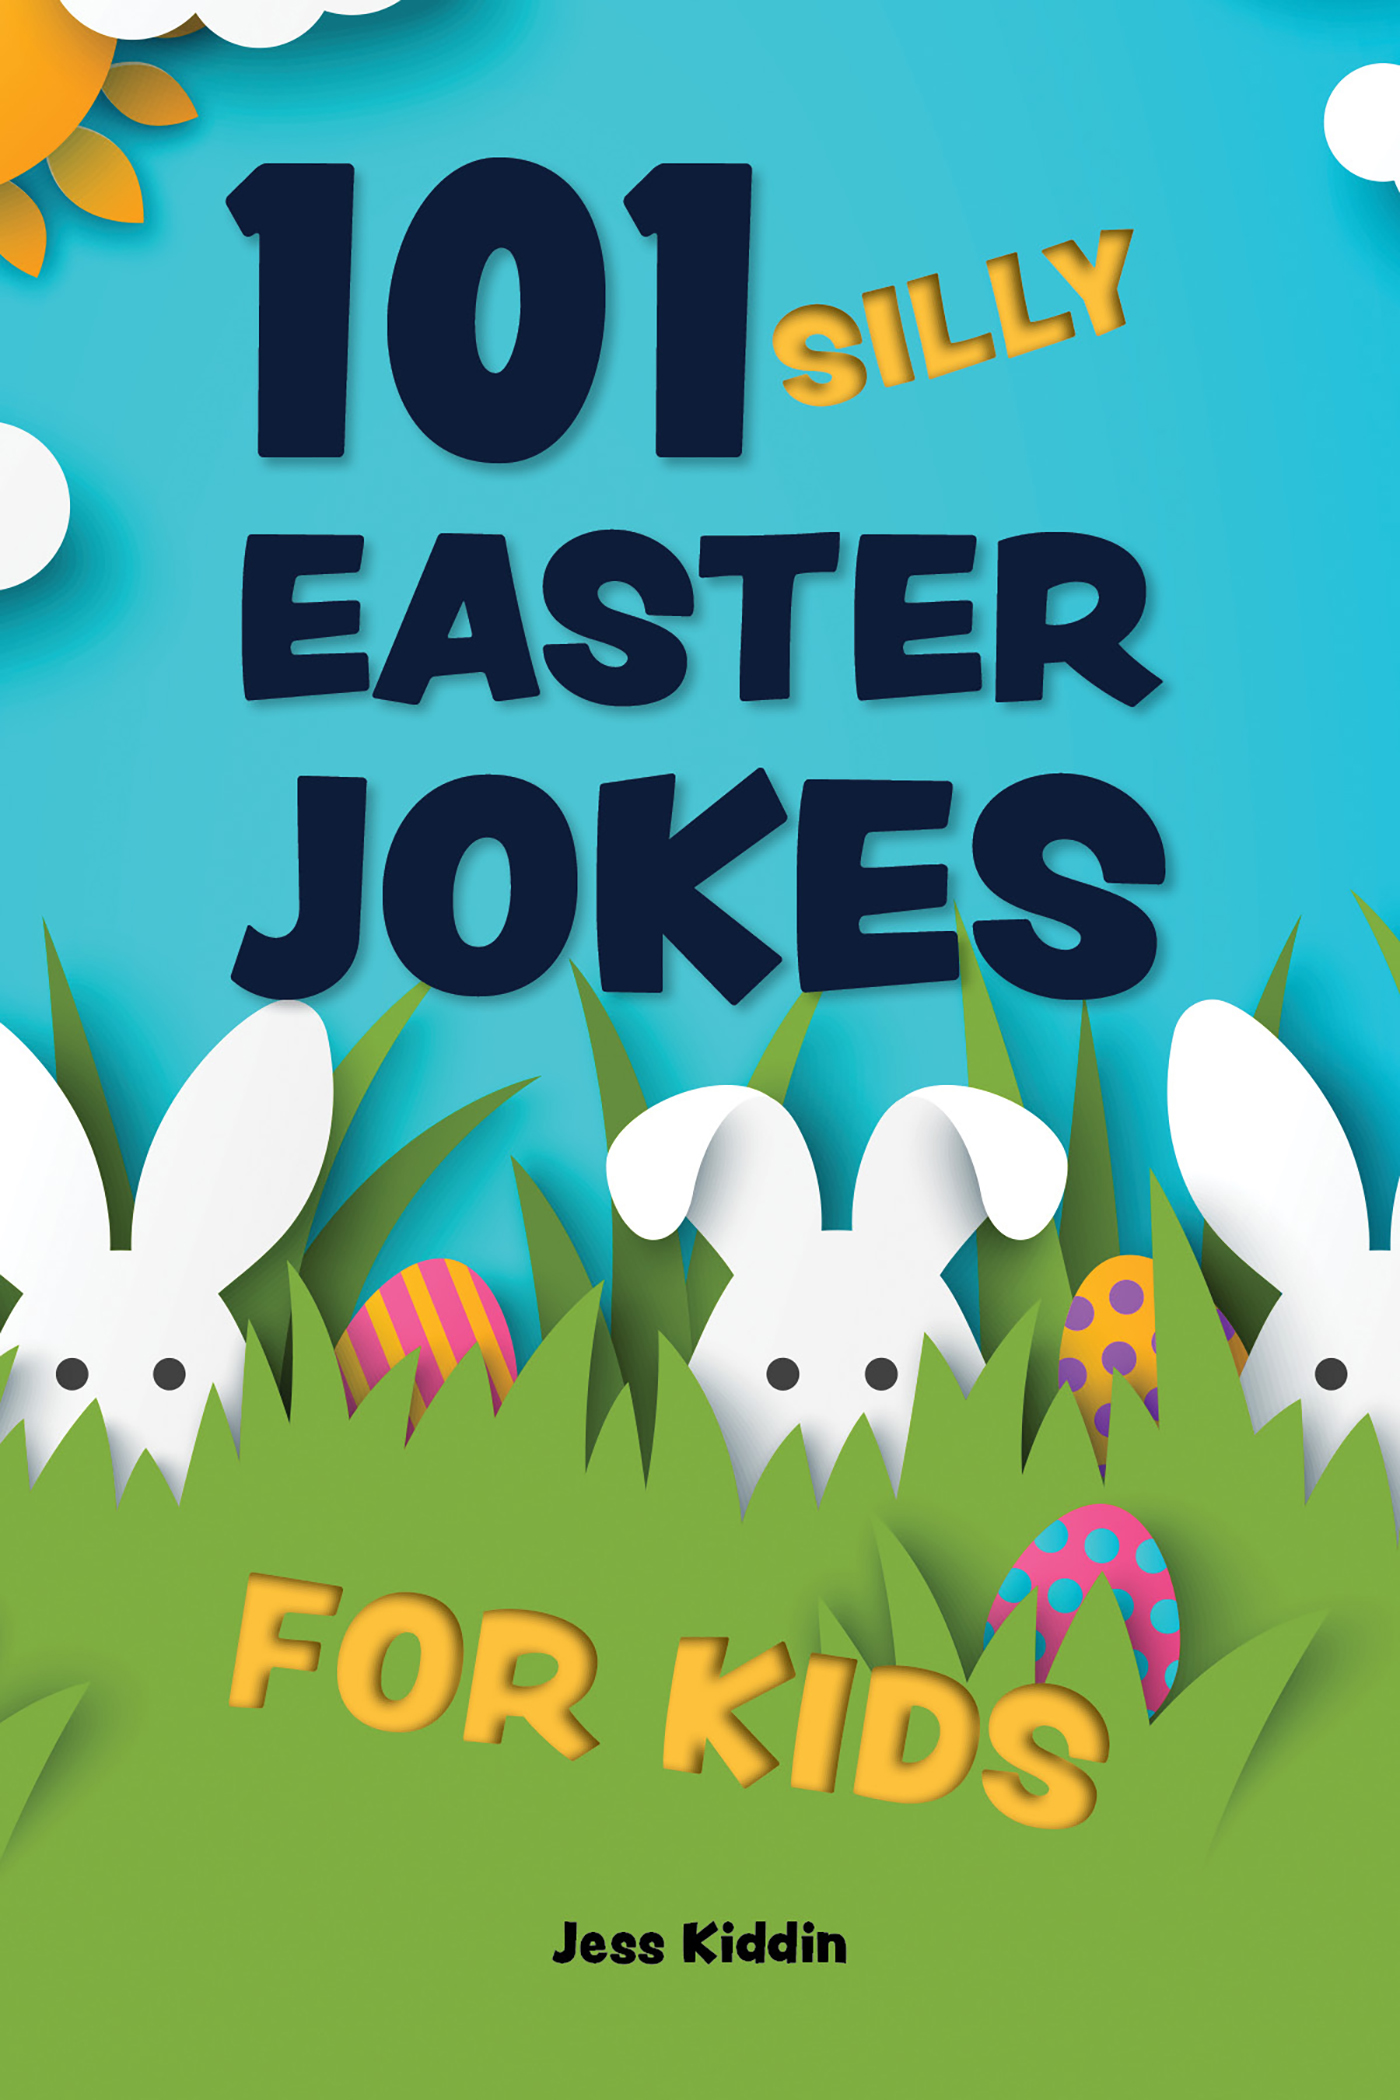 101 Silly Easter Jokes for Kids